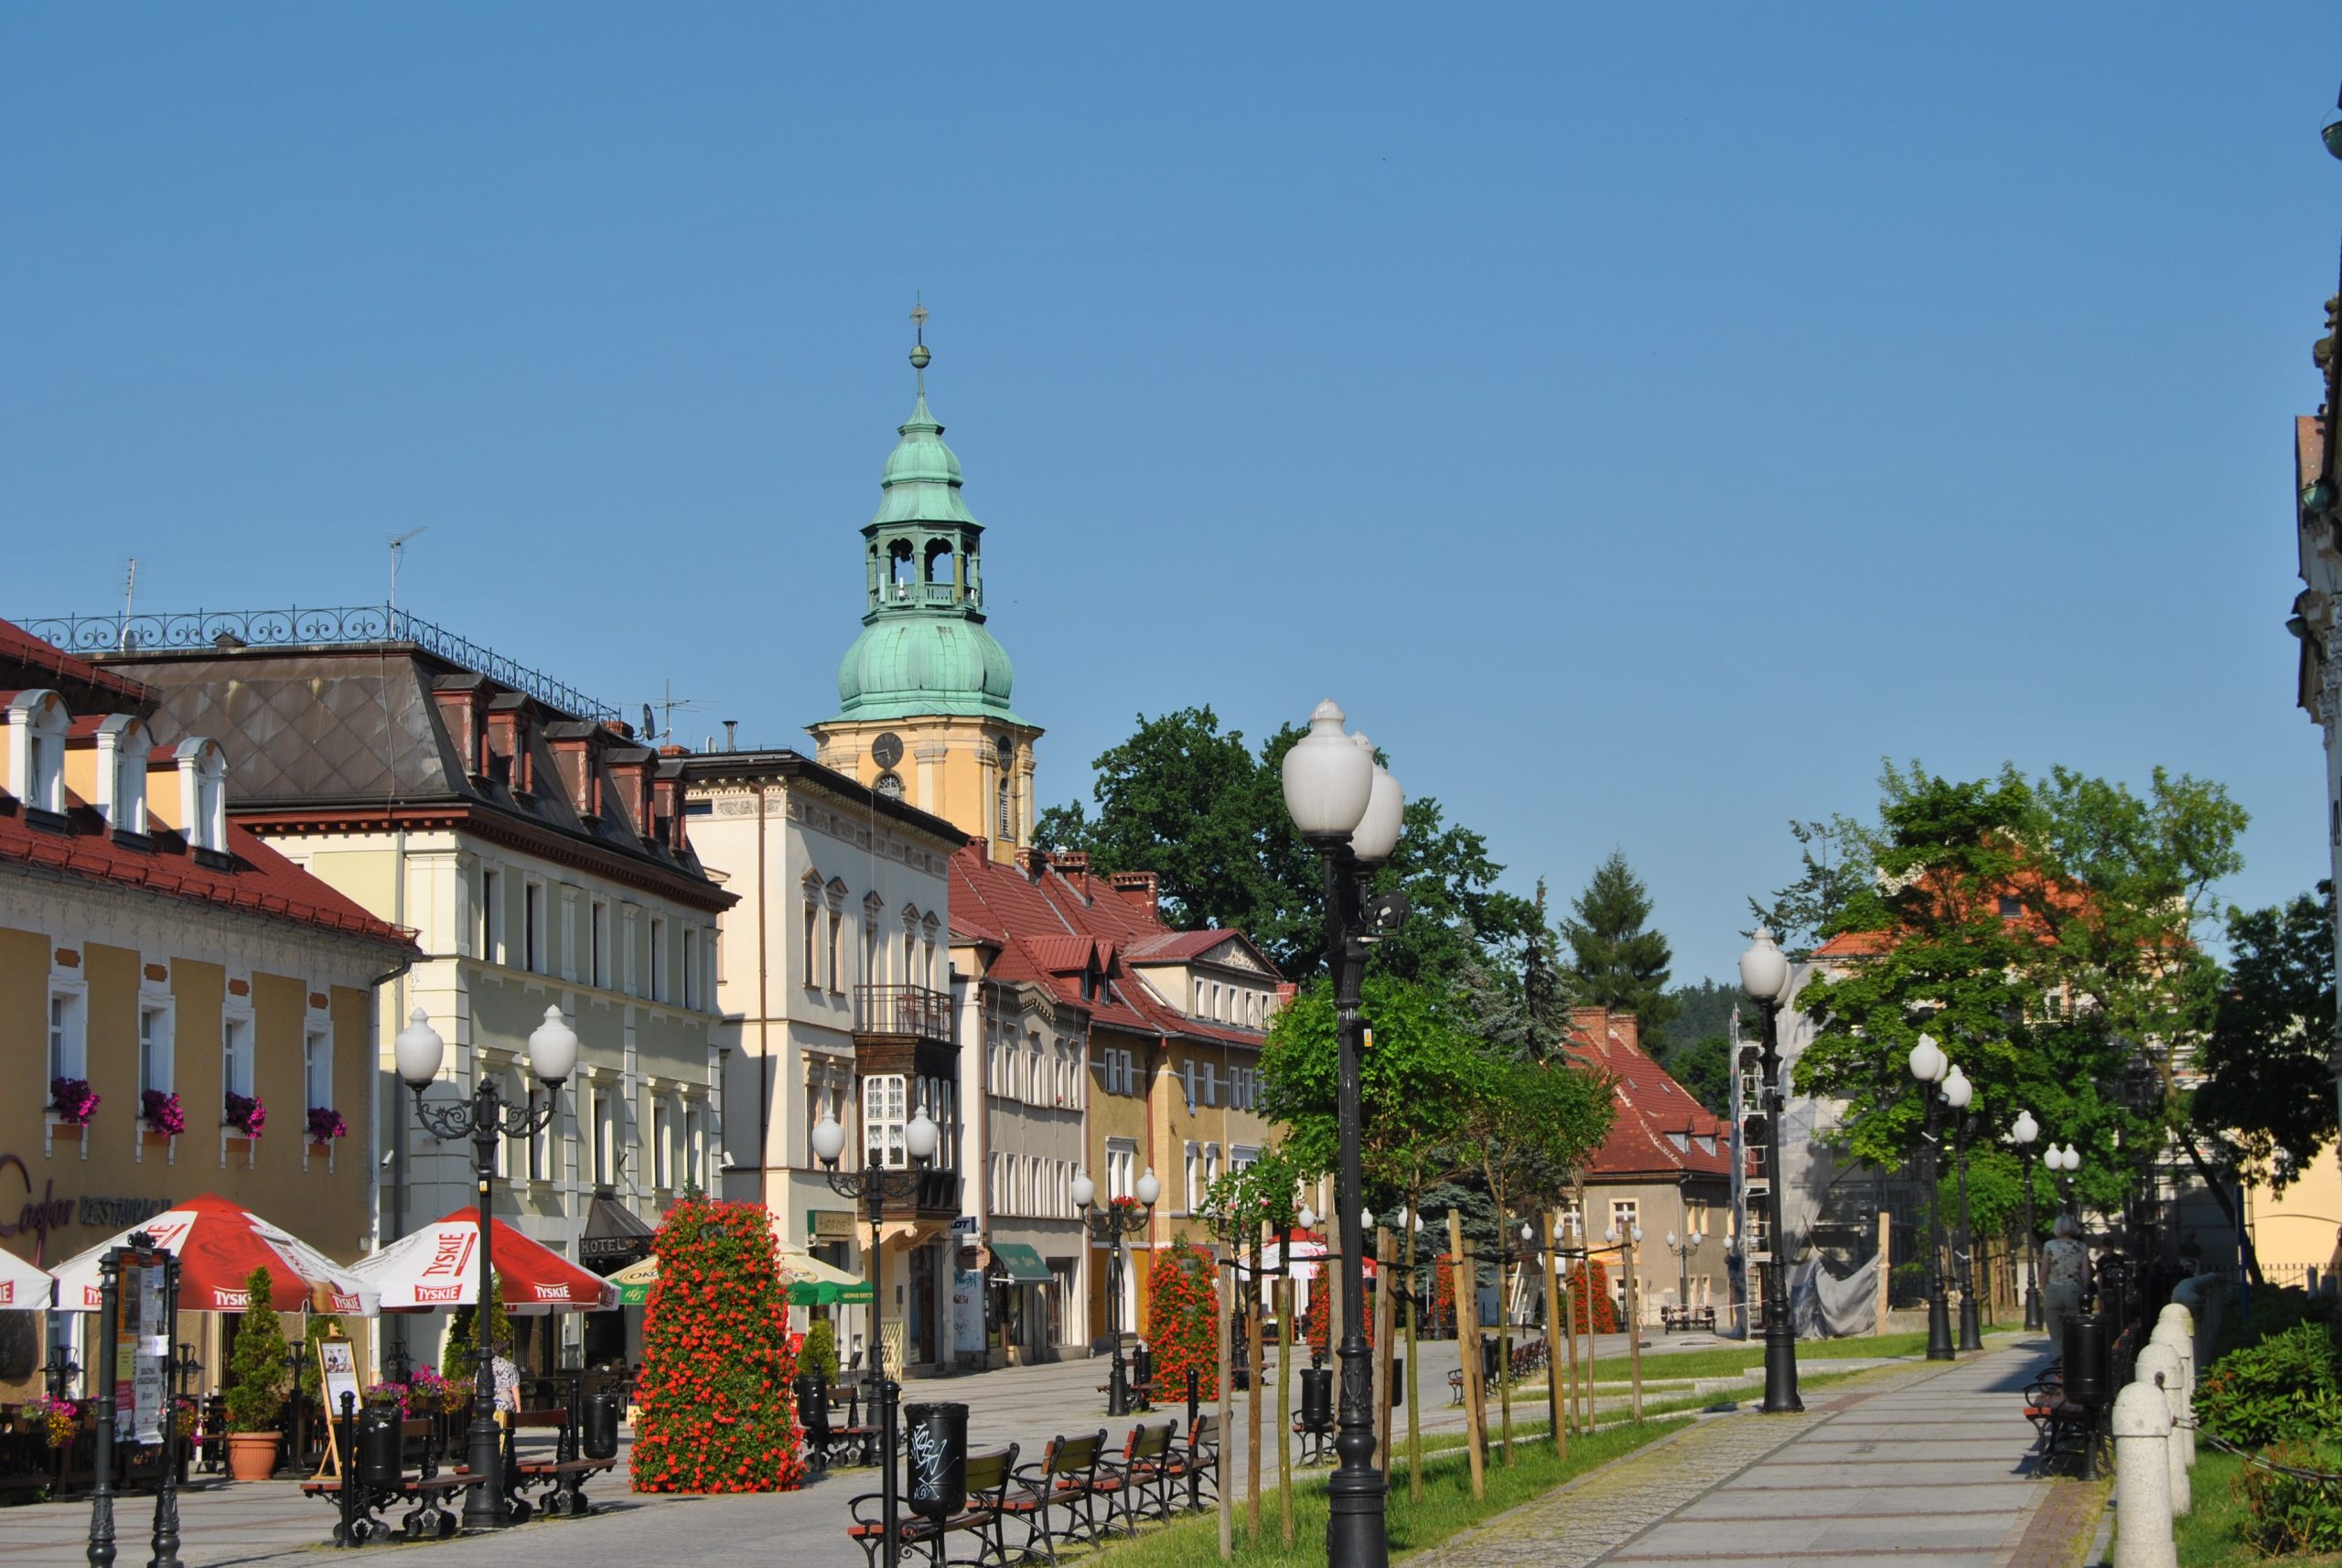 Staden Jelenia Gora i Polen